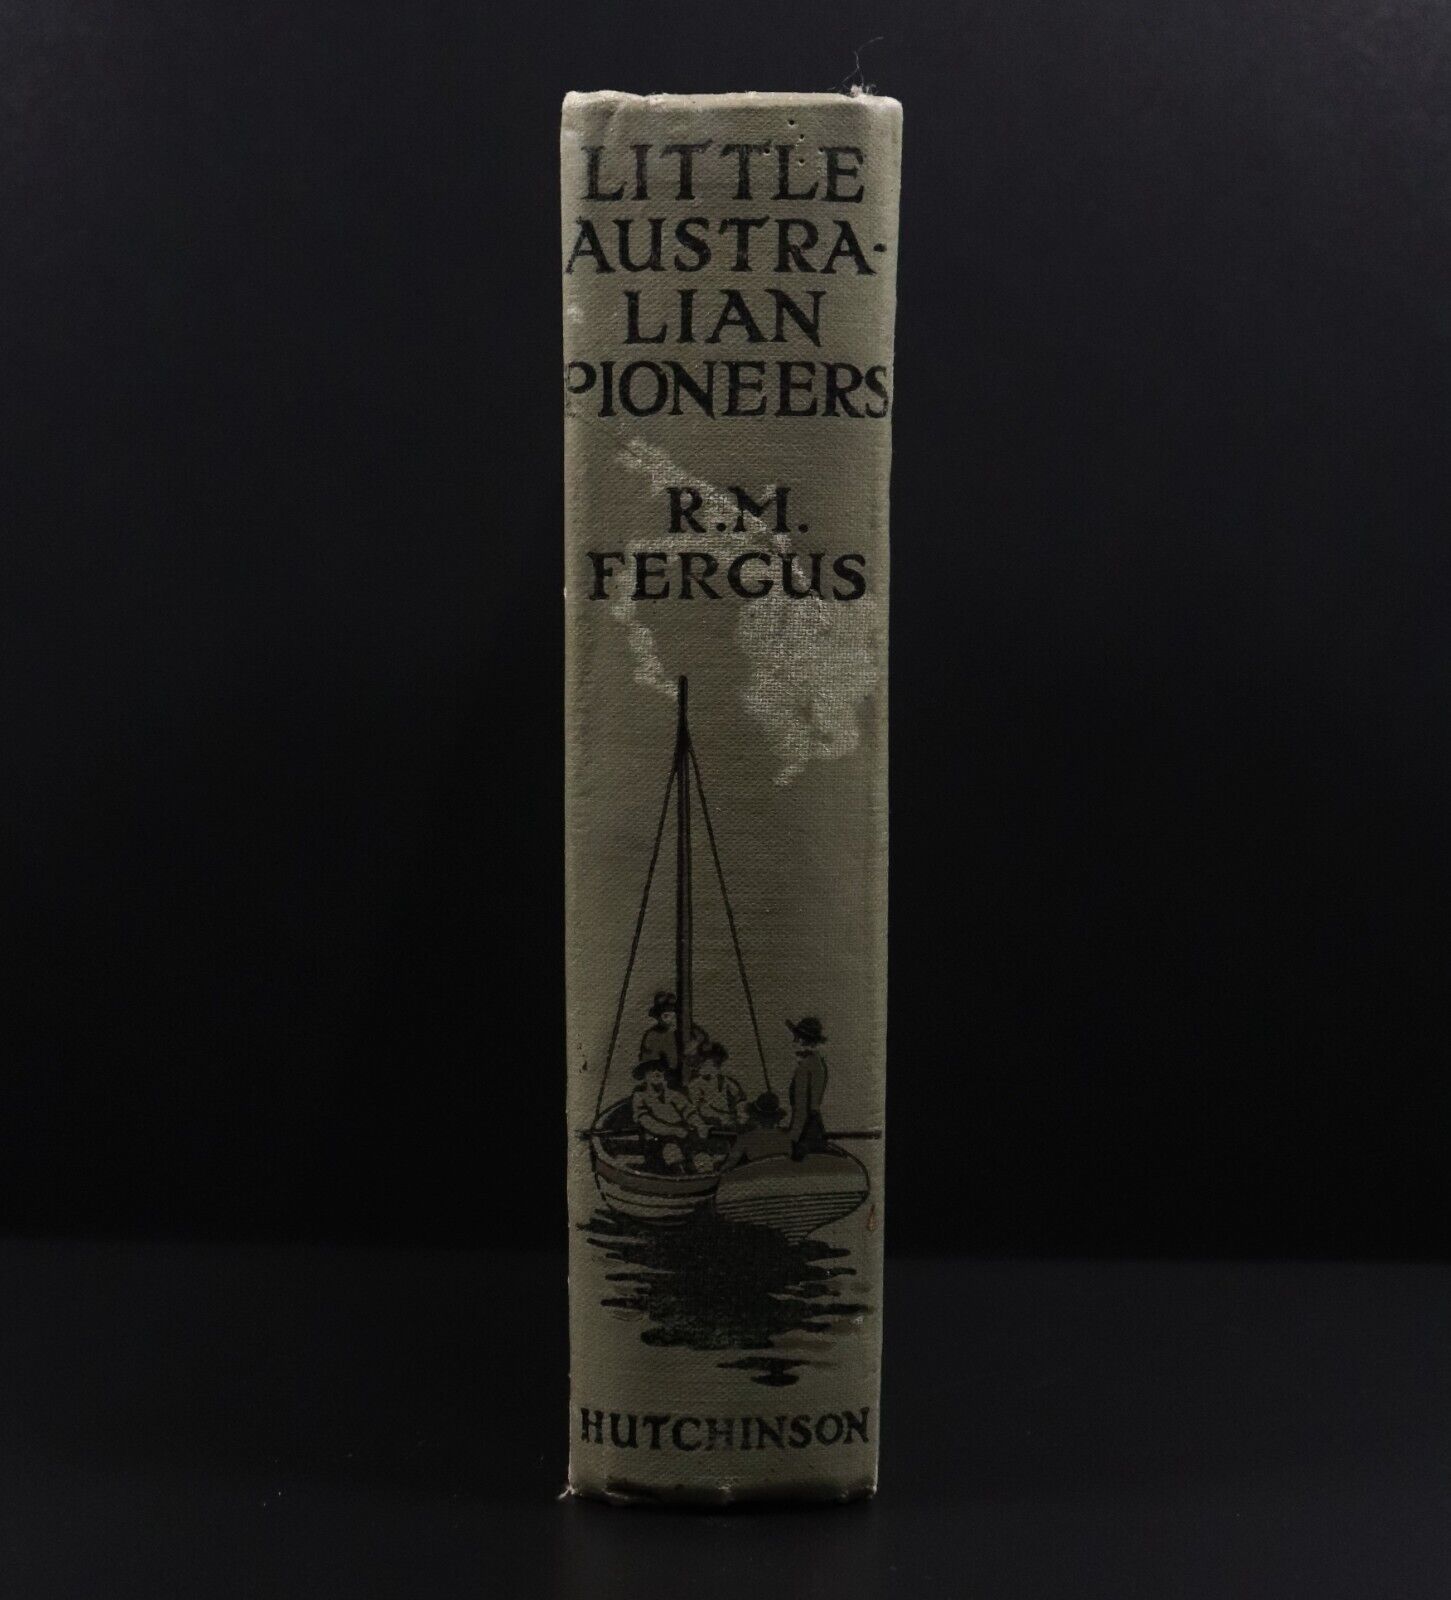 c1928 Little Australian Pioneers by R.M. Fergus Antique Australian Fiction Book